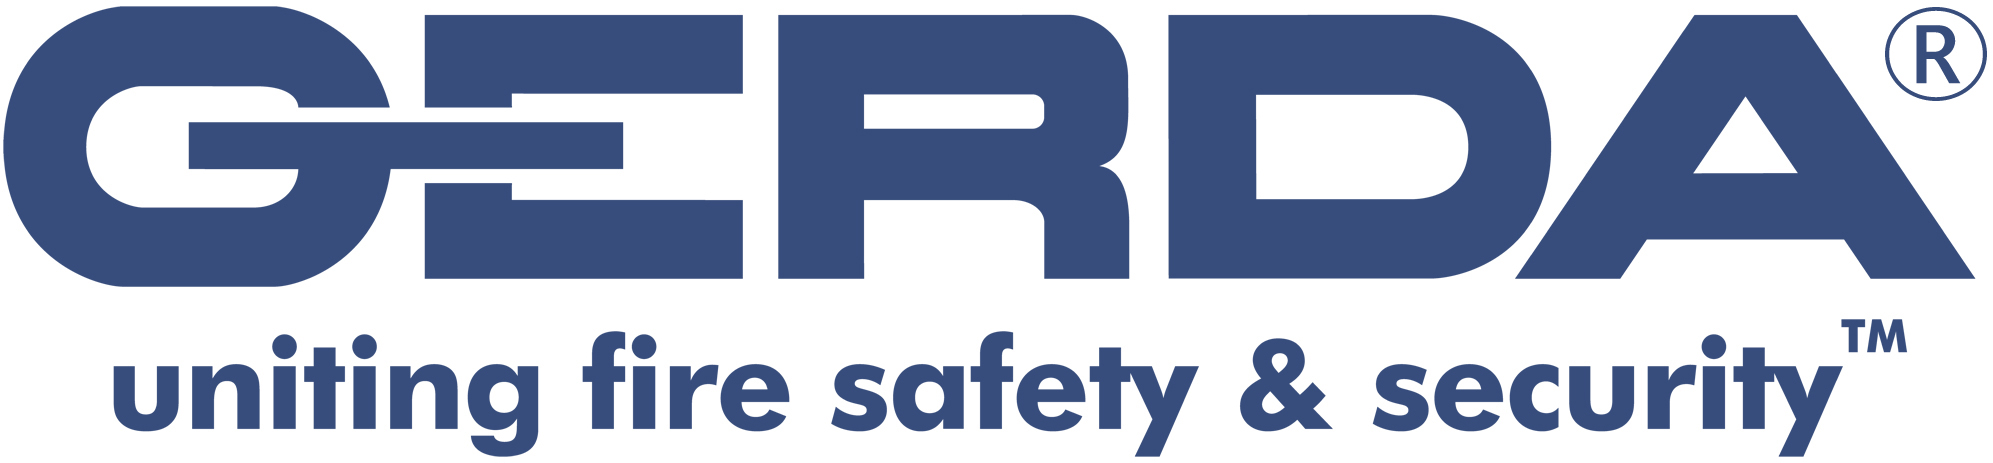 logo for Gerda Security Products Ltd